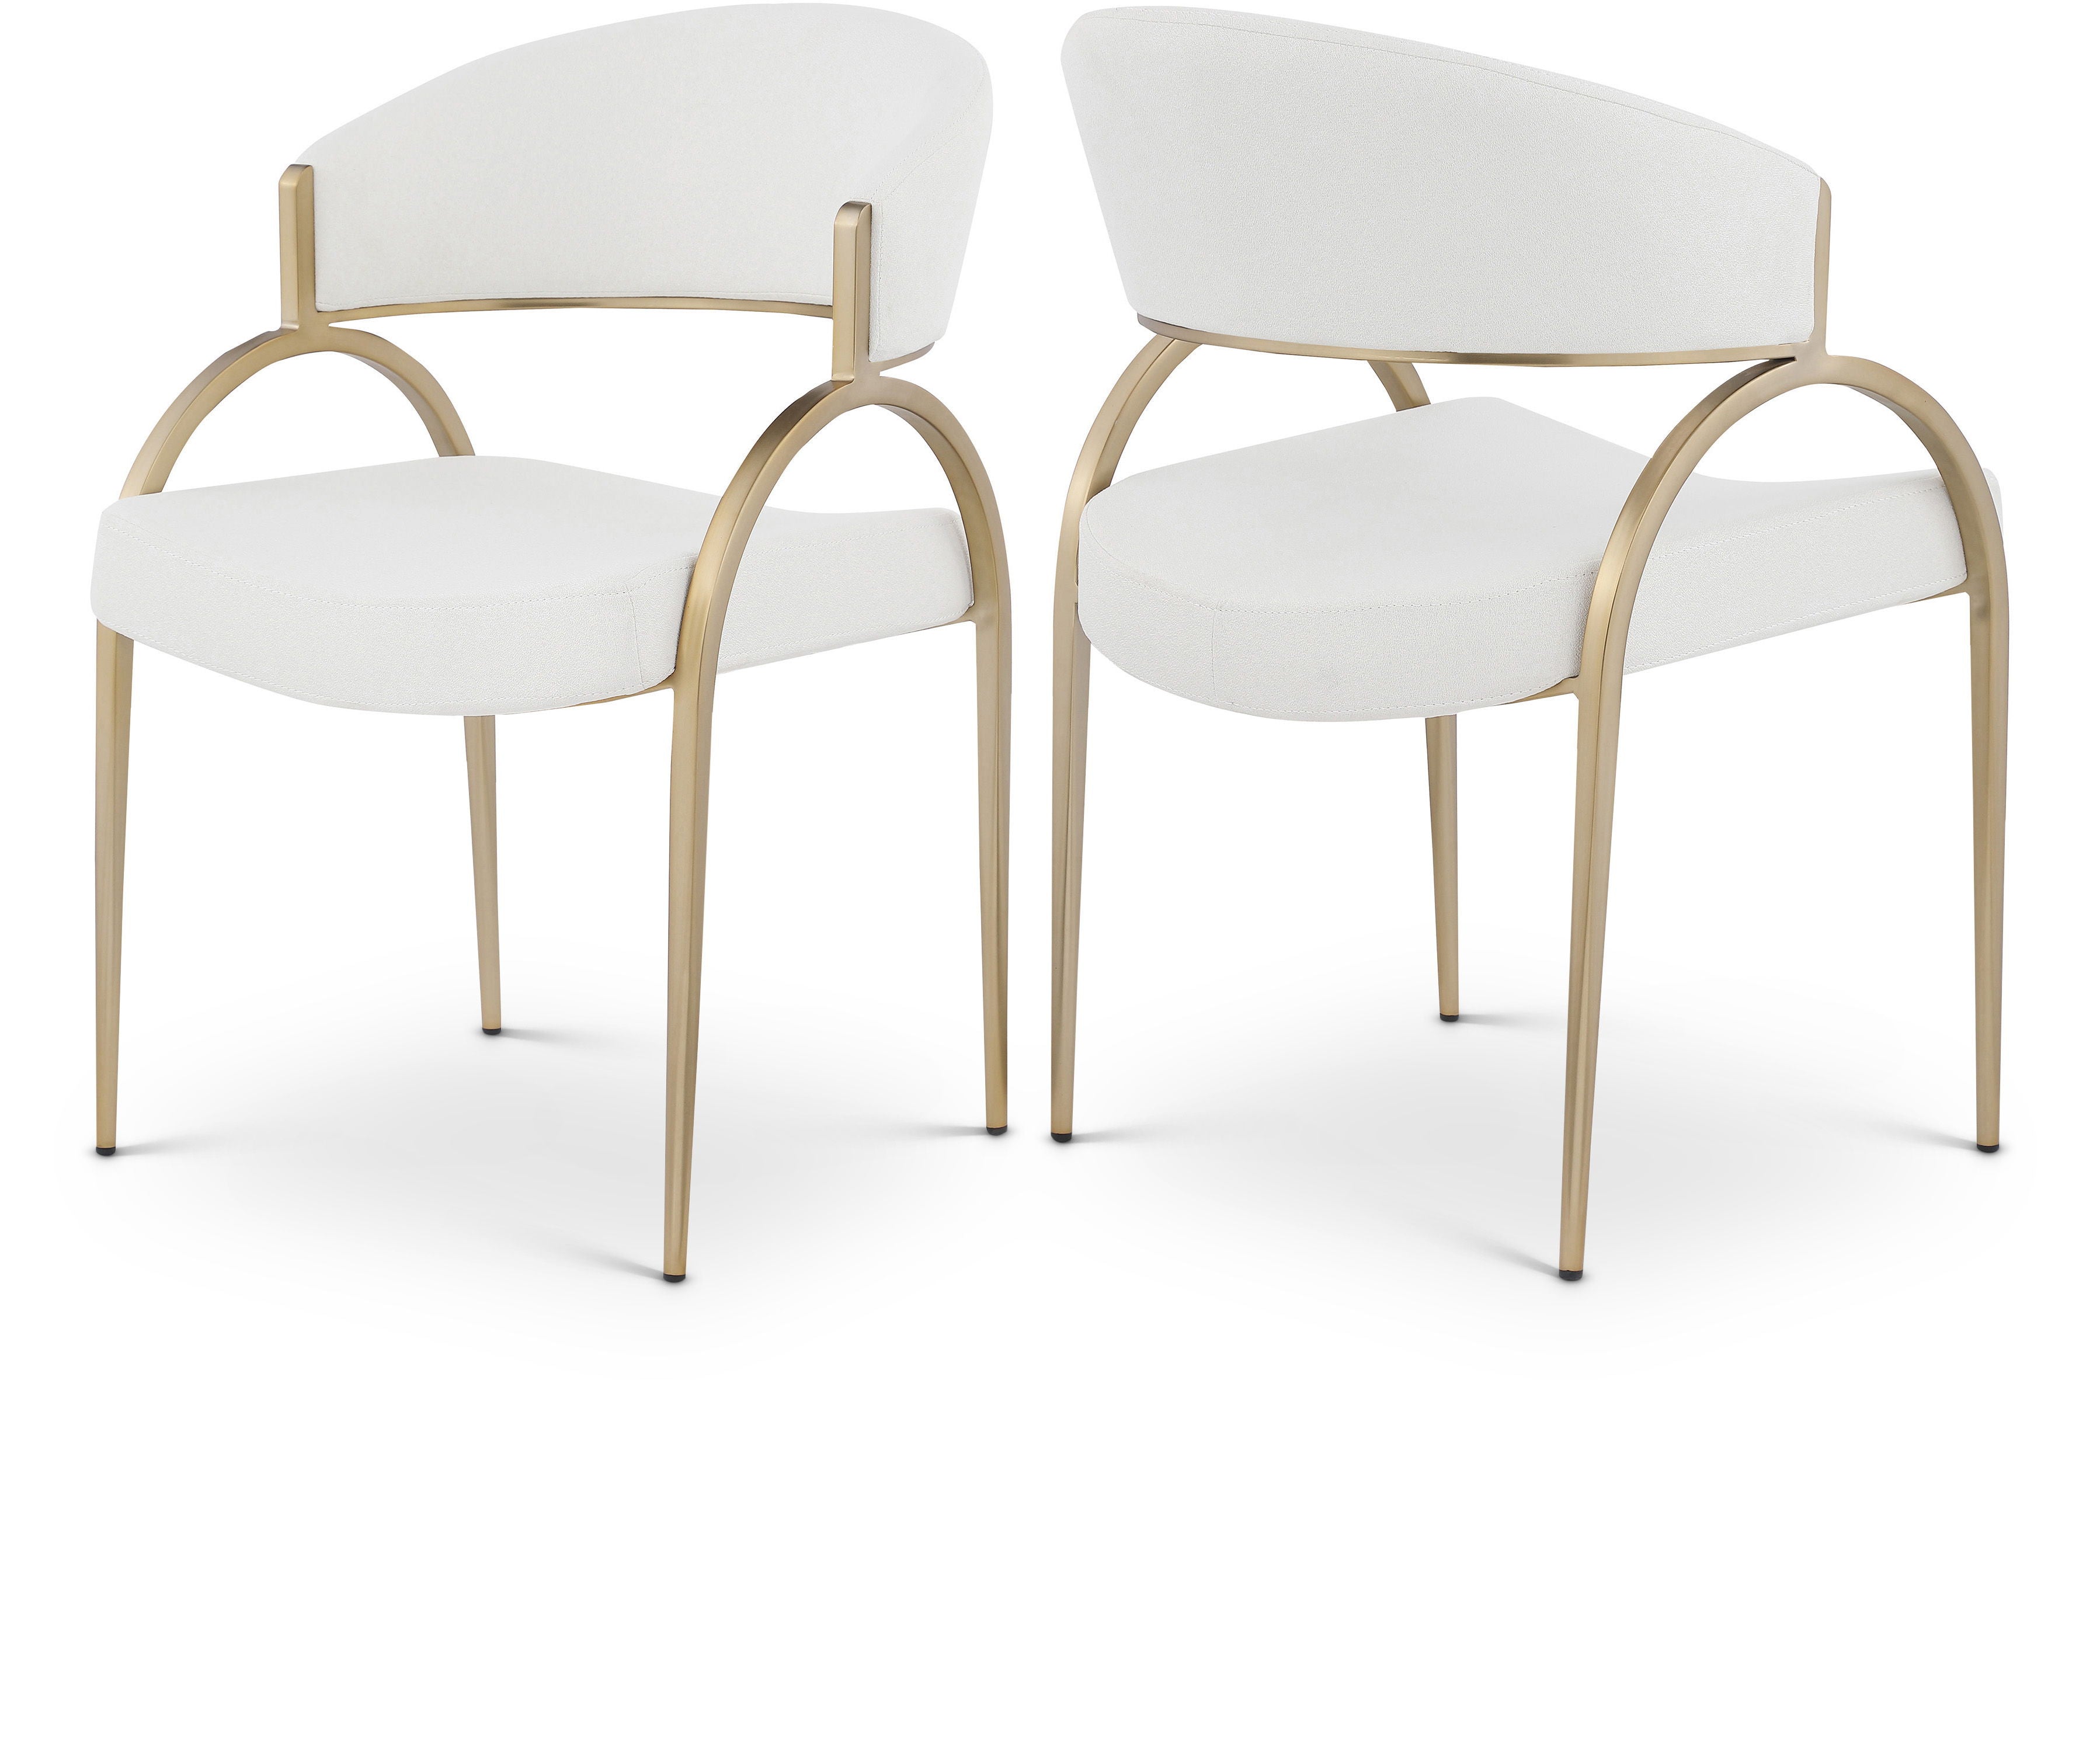 Privet - Dining Chair (Set of 2) - Cream - Fabric - 5th Avenue Furniture